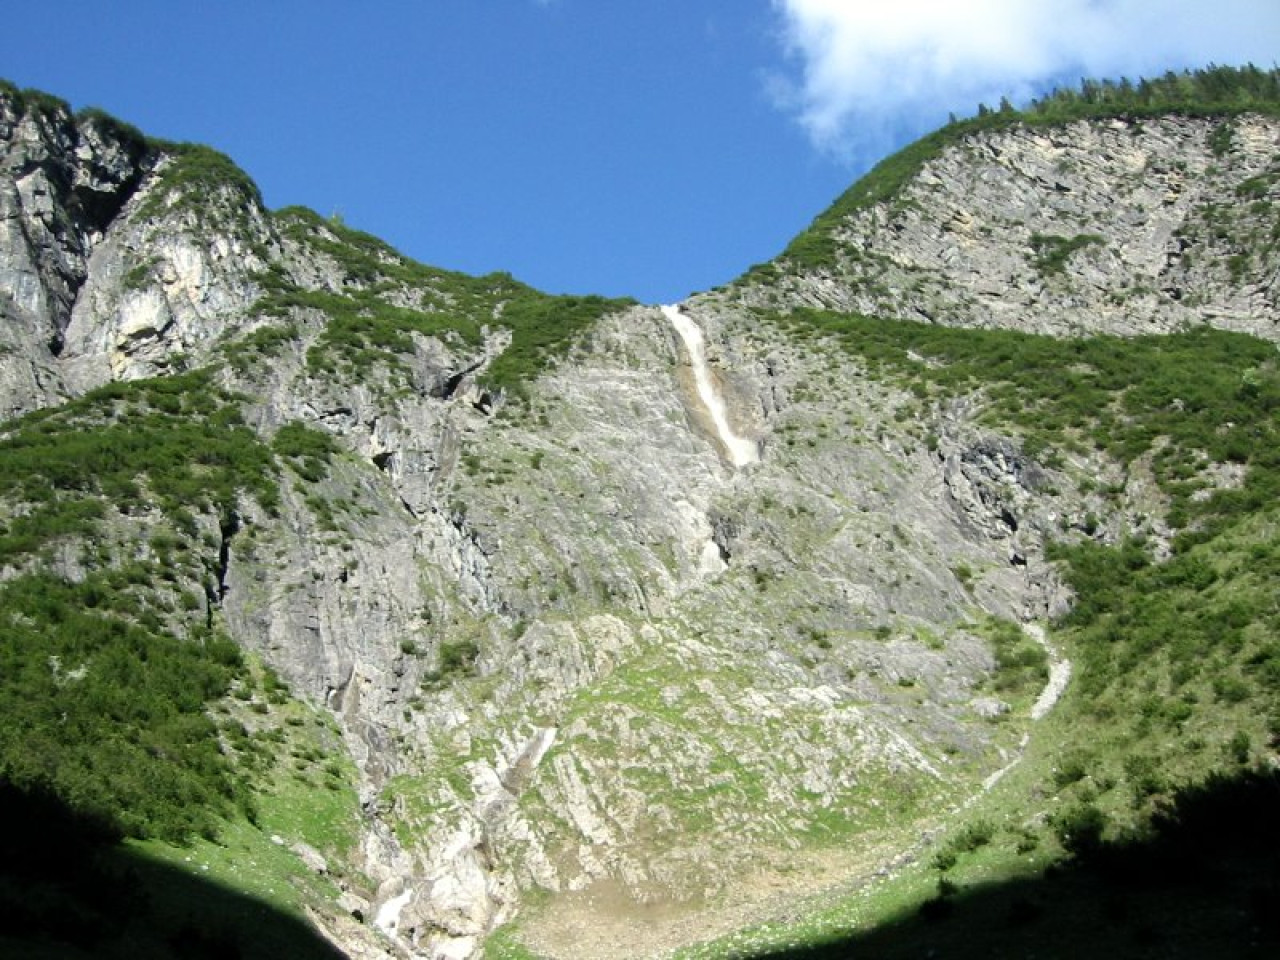  Wasserfall in der Nähe der Roßgumpenalm